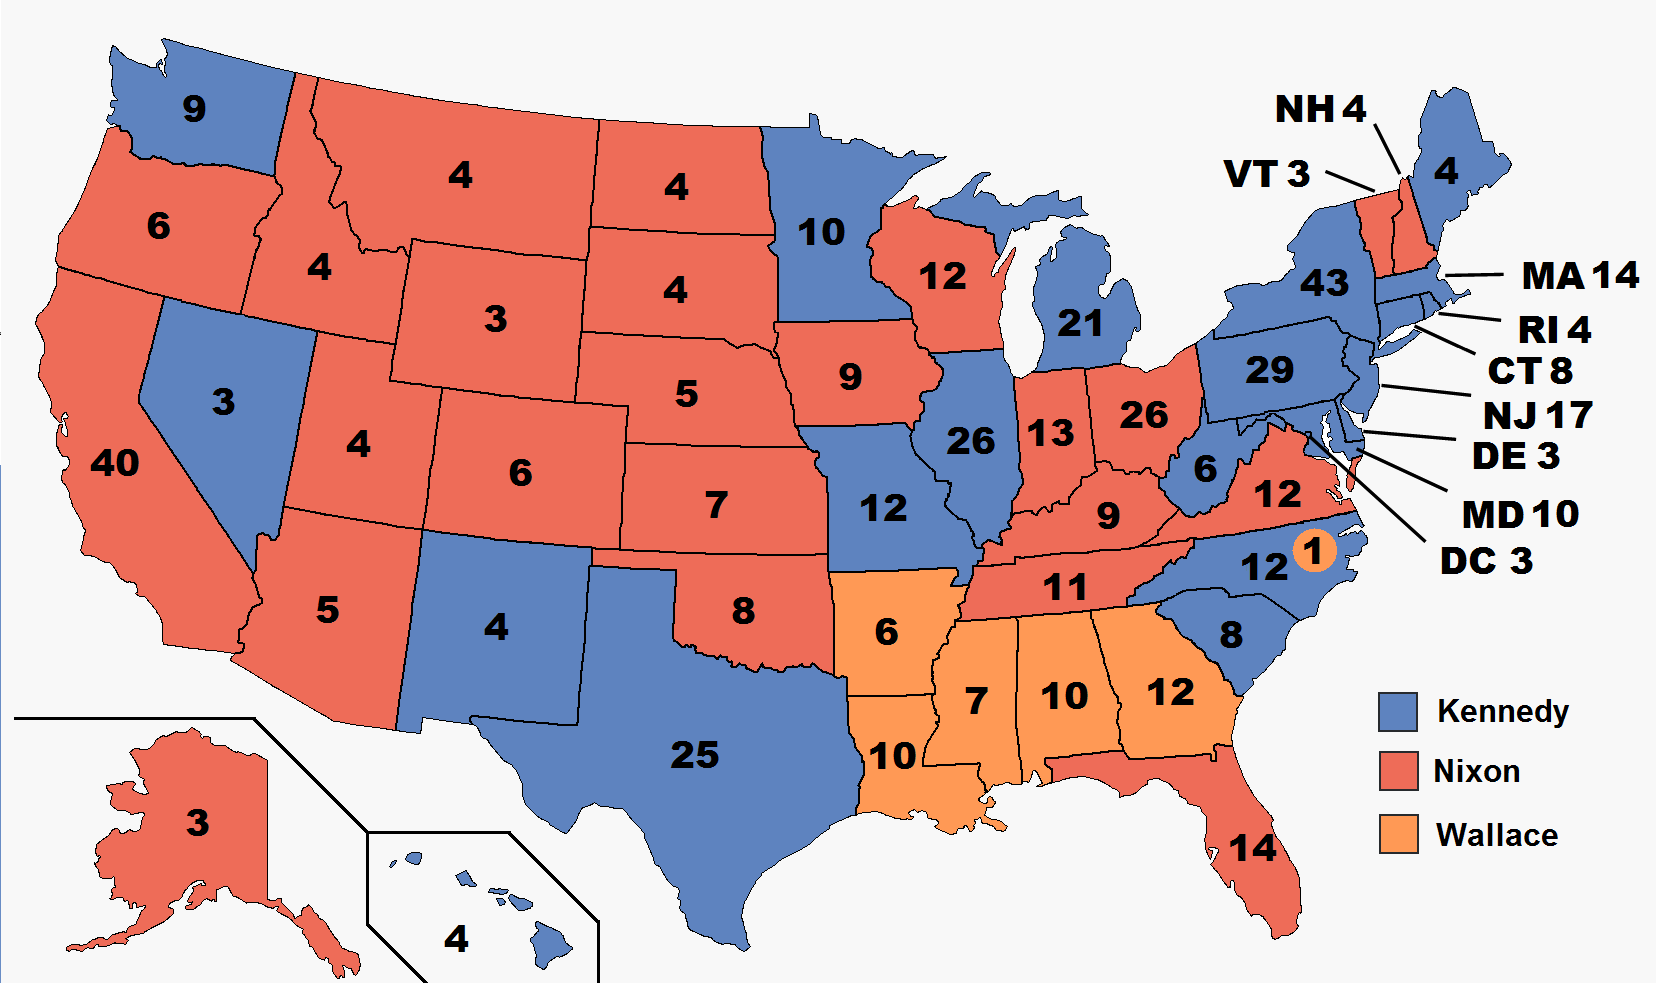 1968 US Presidential Election (Robert Kennedy Survives) Alternative